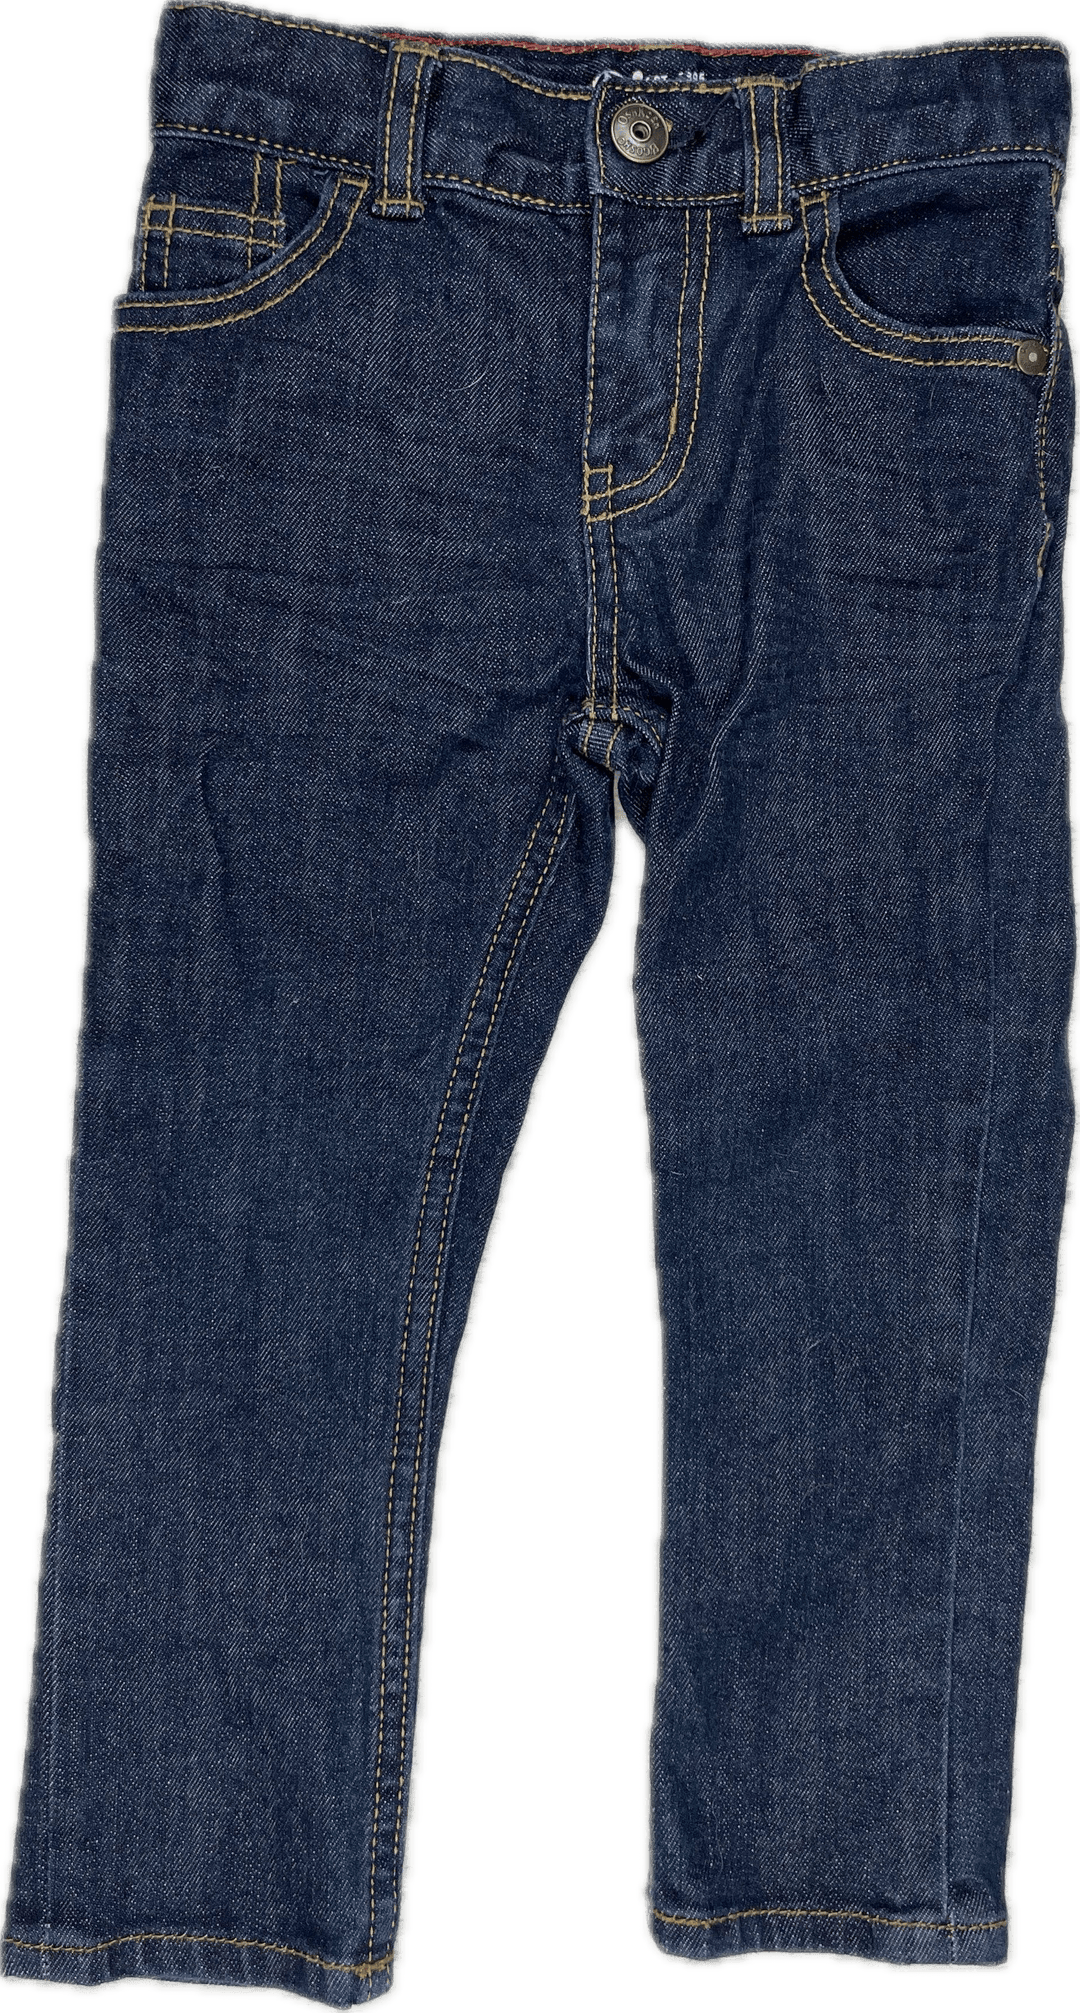 Osh Kosh B'gosh Dark Wash 'Skinny' Jeans - Size 3T - Jean Pool